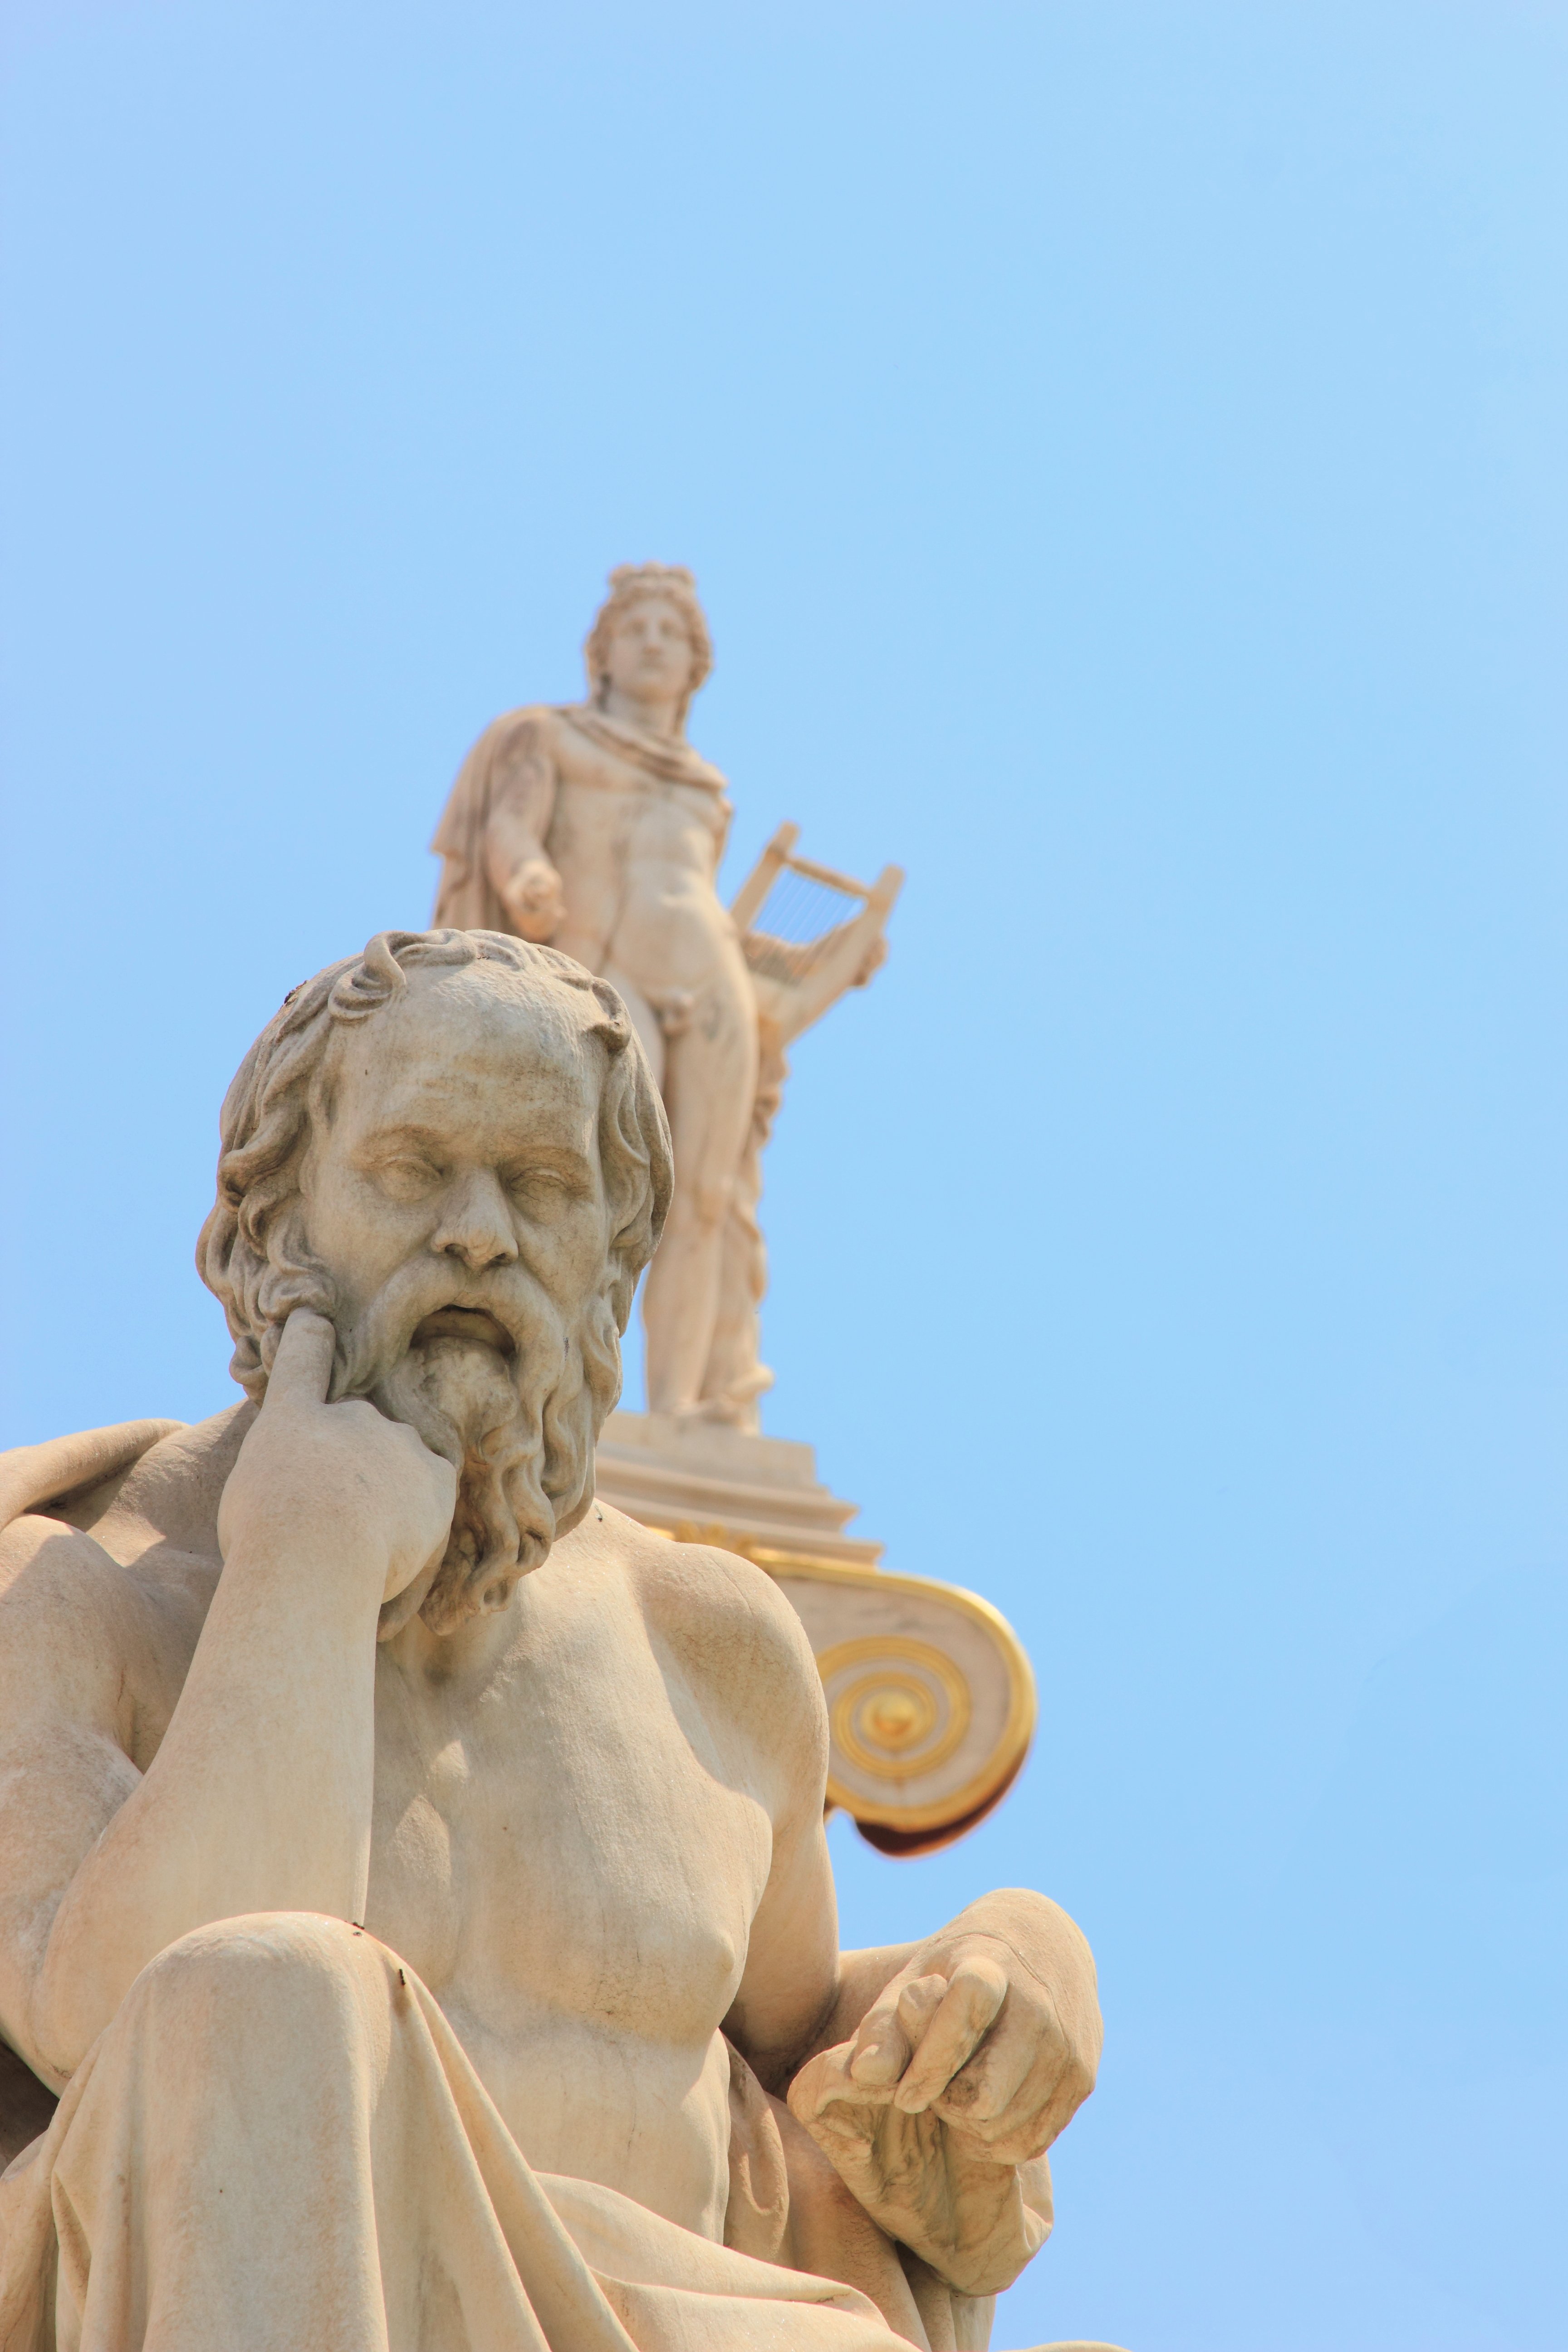 statue of philosopher, Plato who understood challenges